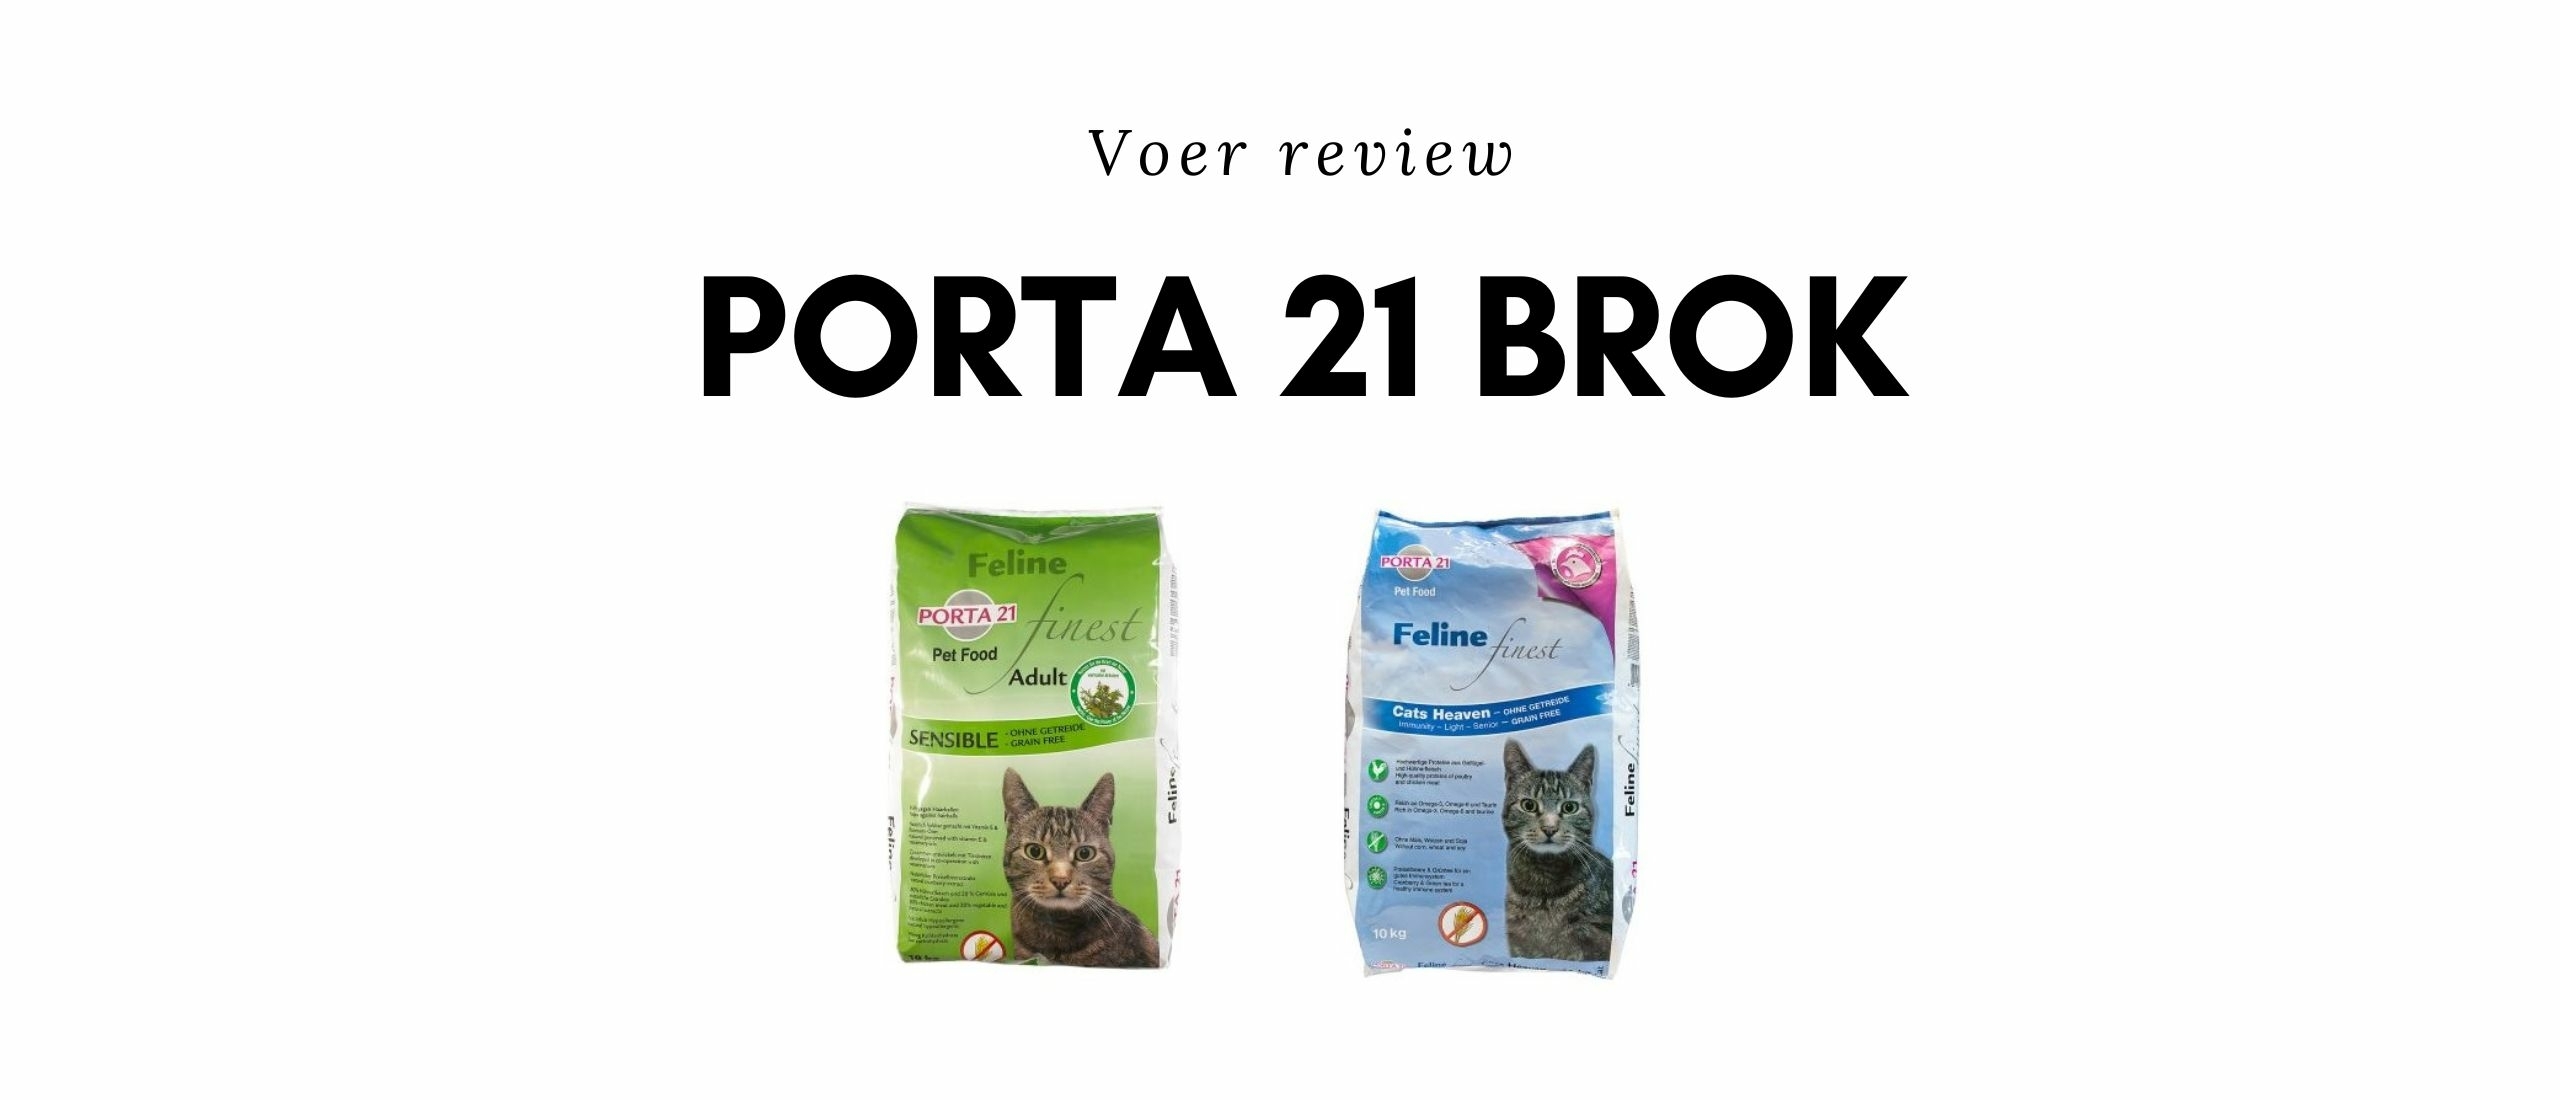 Voer Review Porta 21 Brok